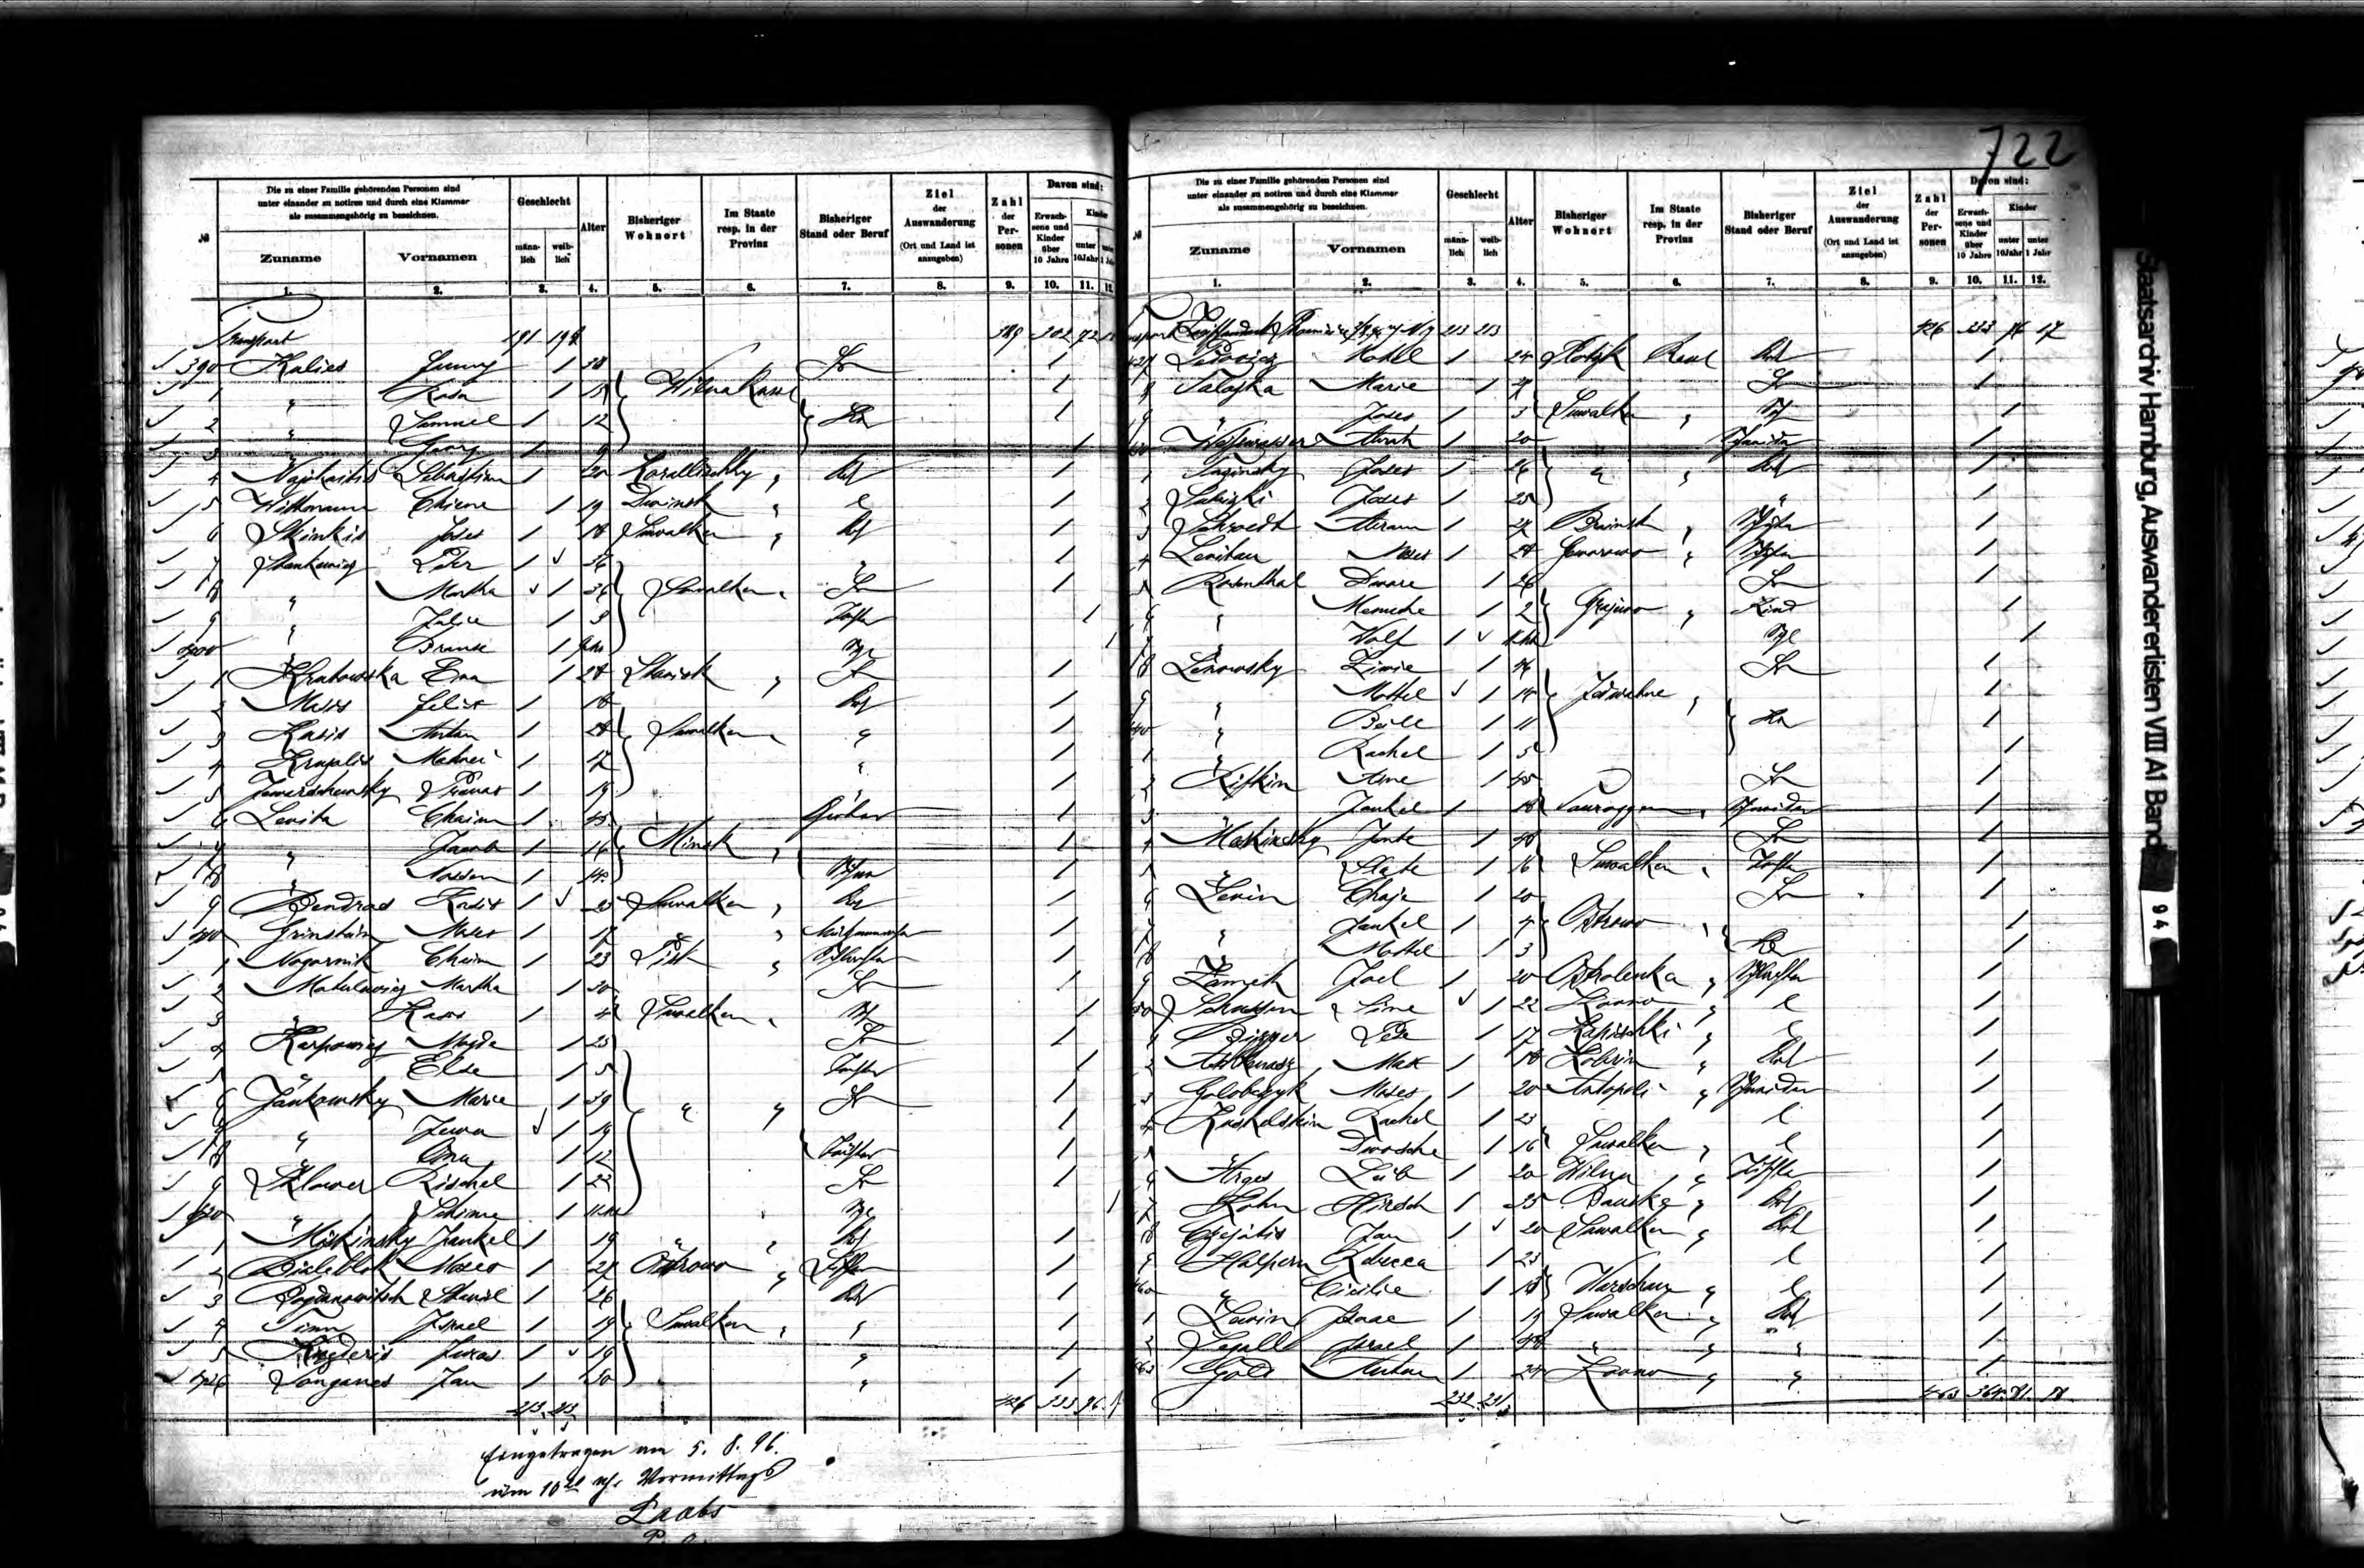 Chaim (Haiman), Jacob, & Nossen (Nathan) Levita (Levin) on a Hamburg passenger list in August 1896